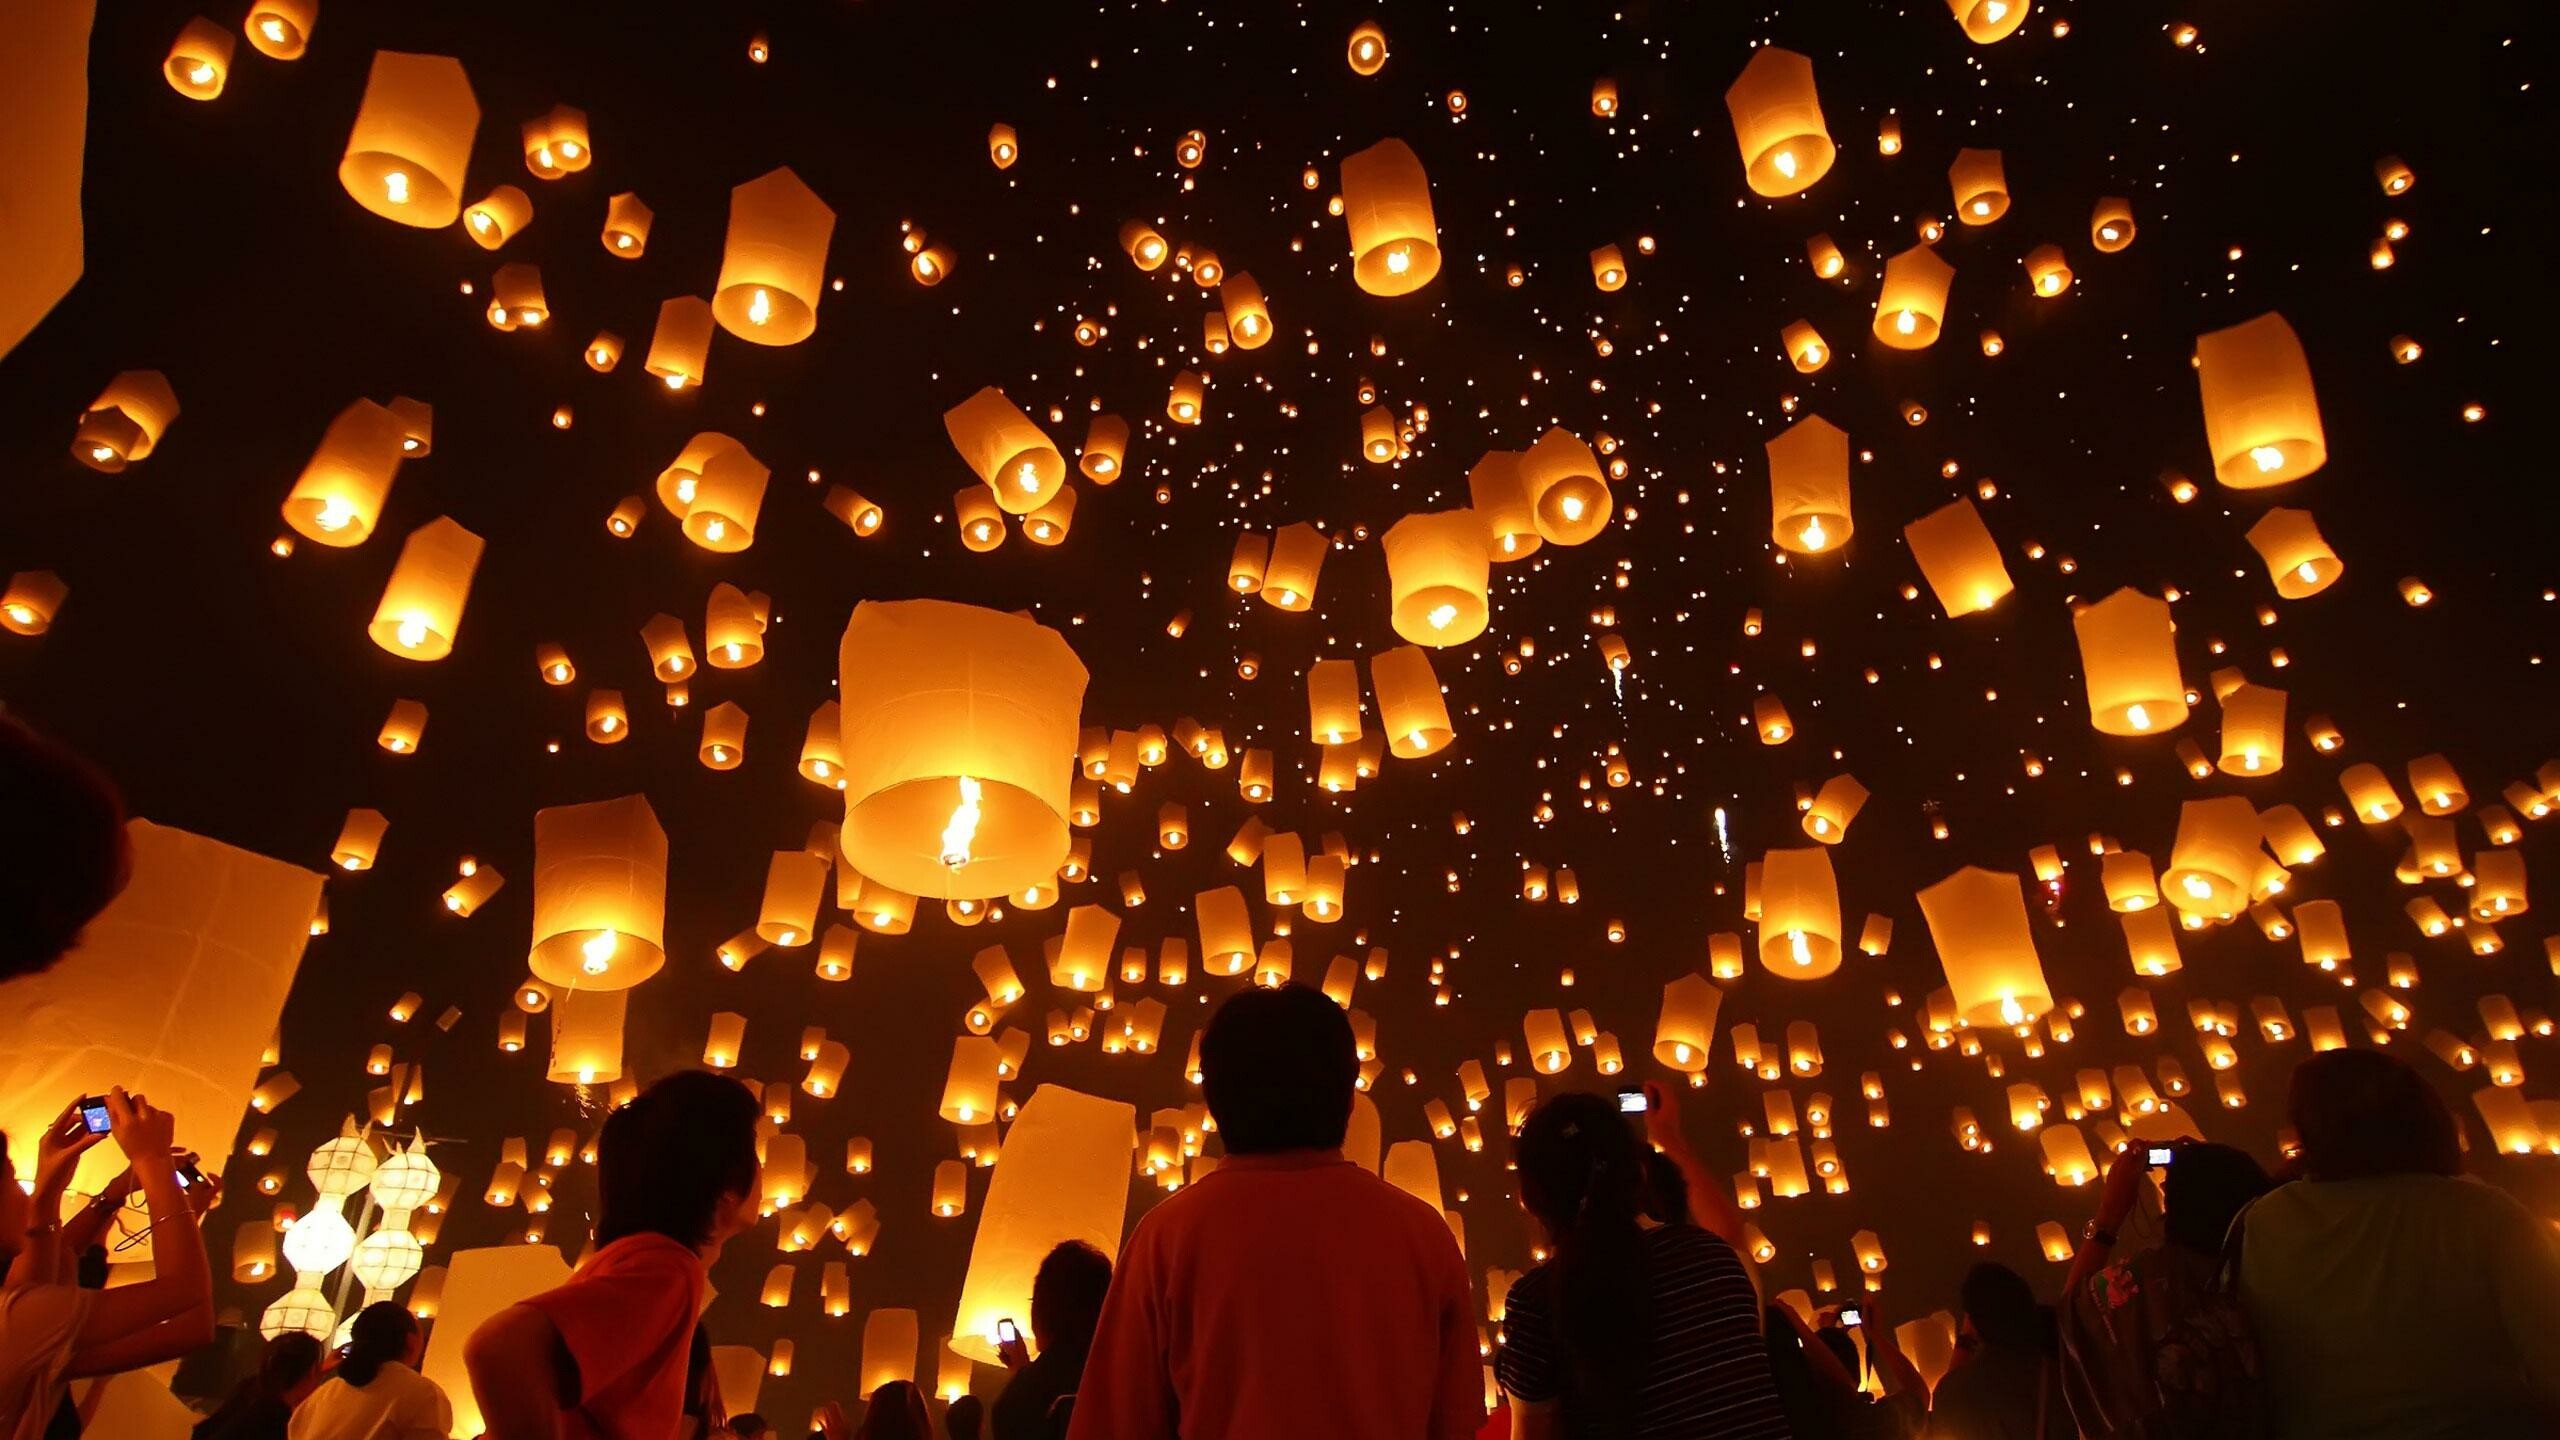 Lantern Festival: An Uposatha day on the Chinese calendar, Public celebration. 2560x1440 HD Wallpaper.